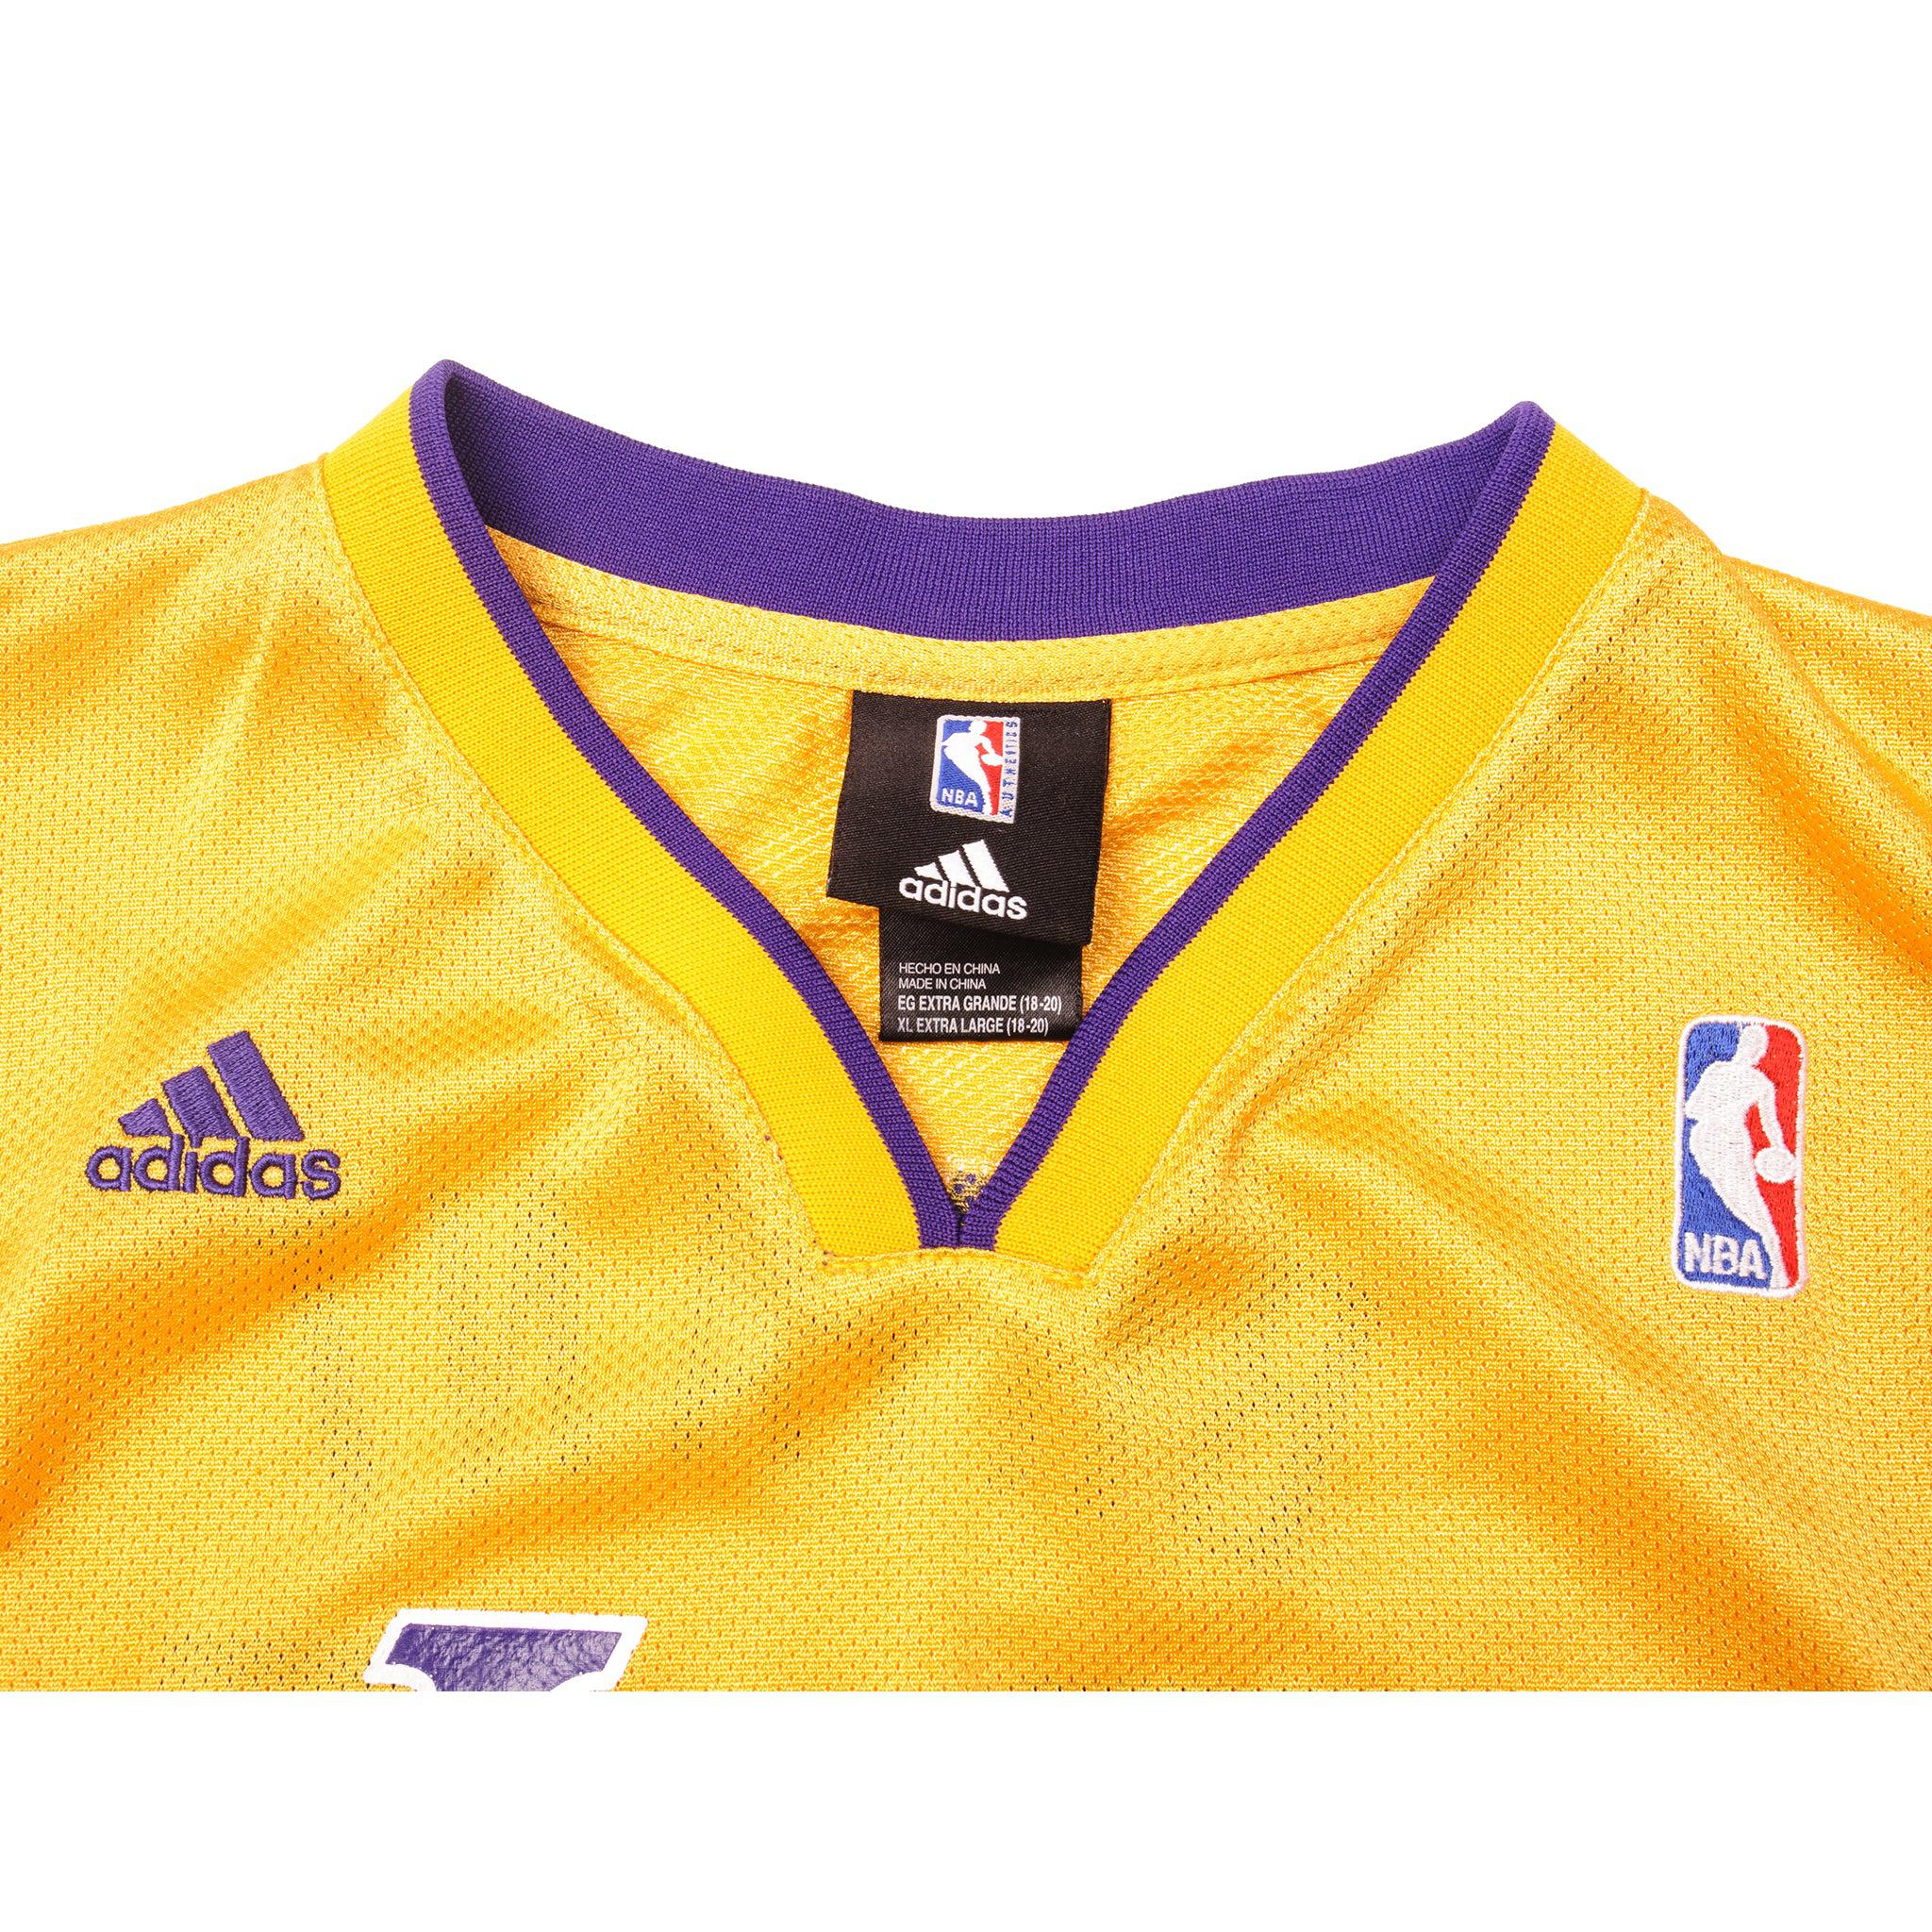 RARE Kobe Bryant #24 Adidas NBA 4Her Gold Los Angeles Lakers